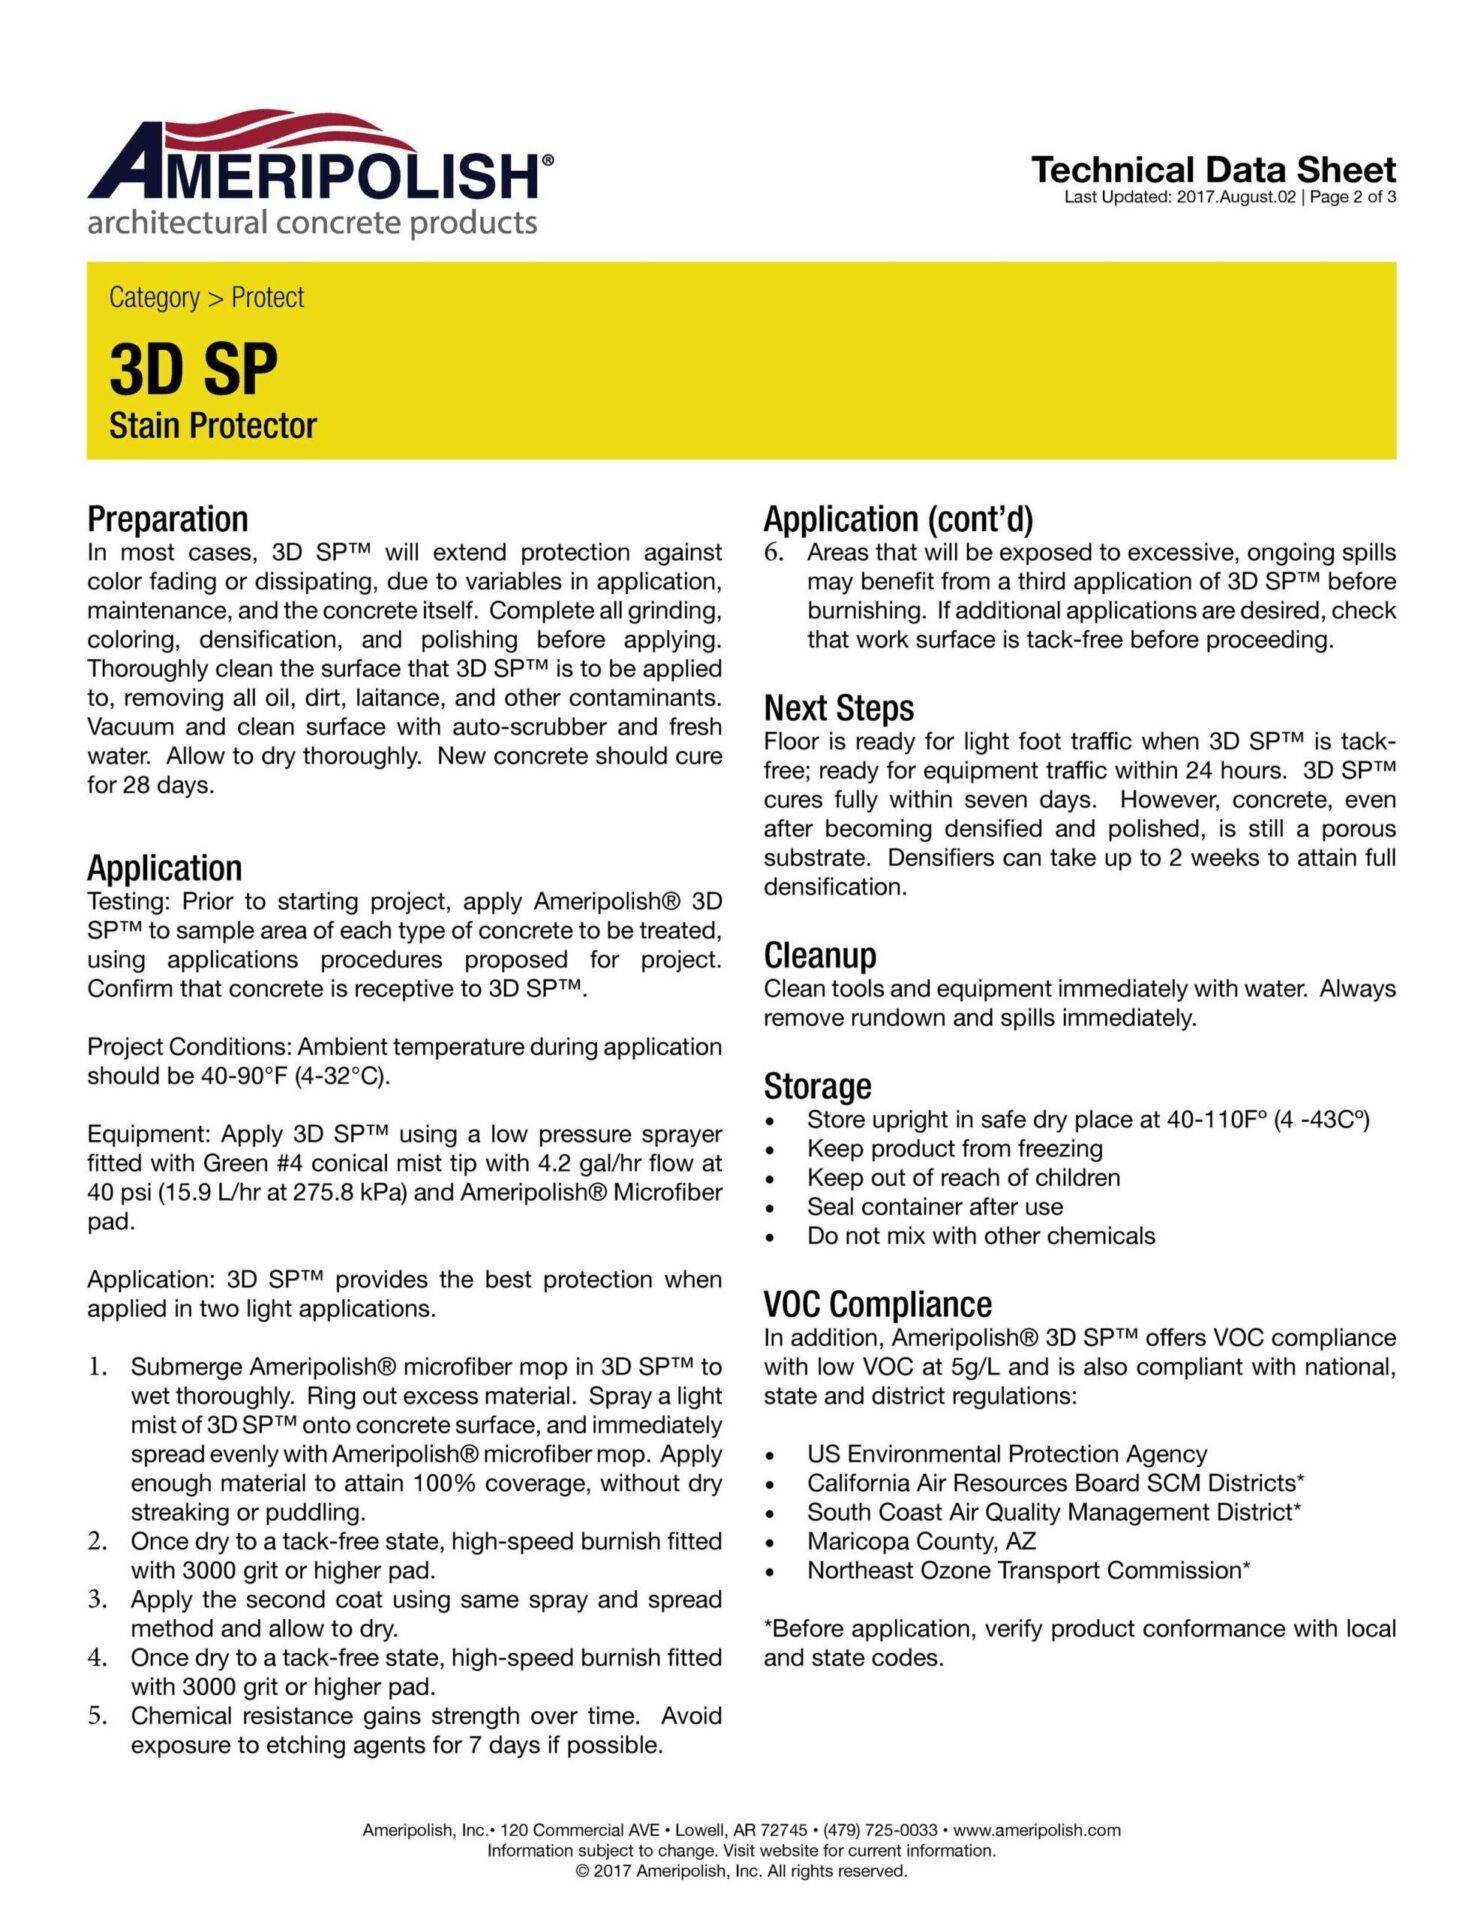 Ameripolish 3D SP Data Sheet Page 2